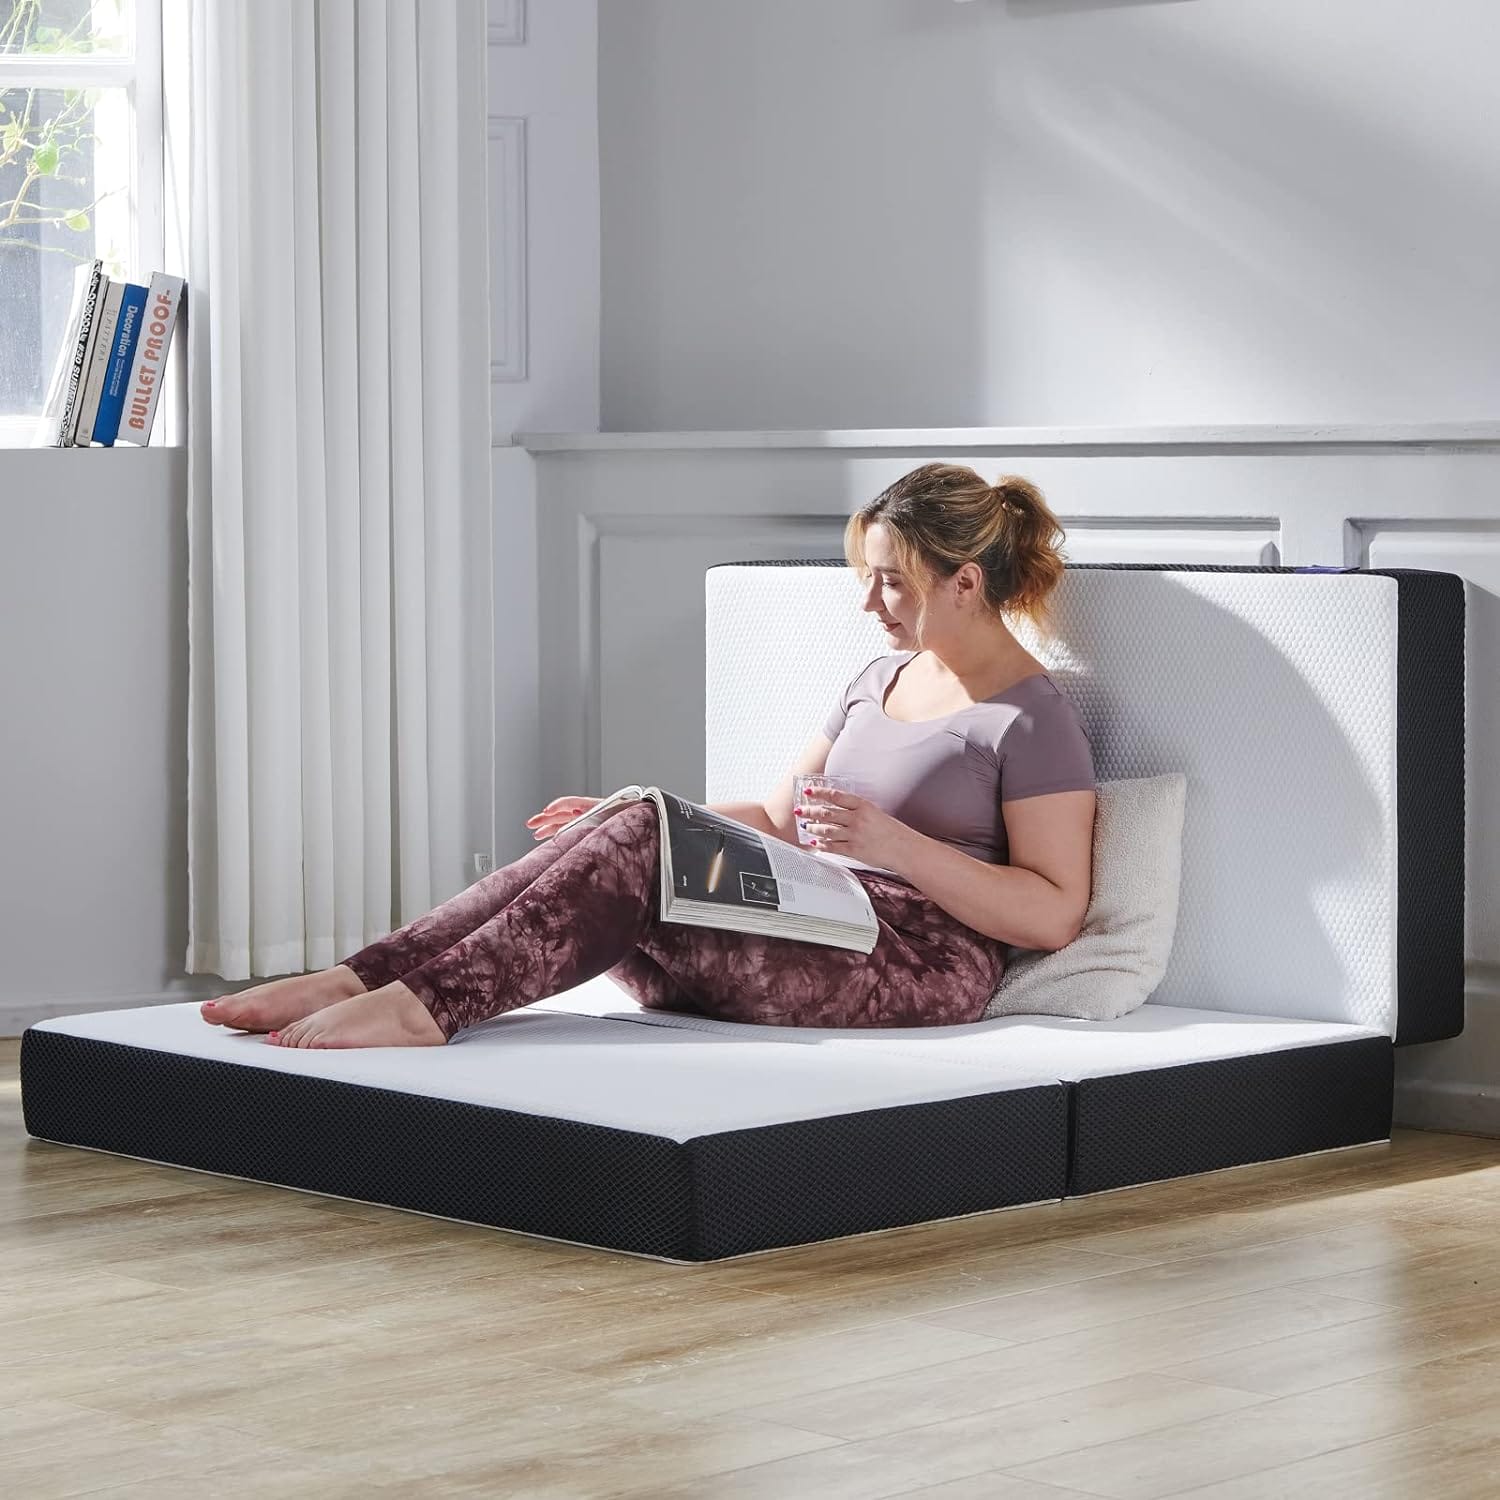 s secretland folding mattress review - S SECRETLAND Mattress Review: Portable Comfort for Any Space